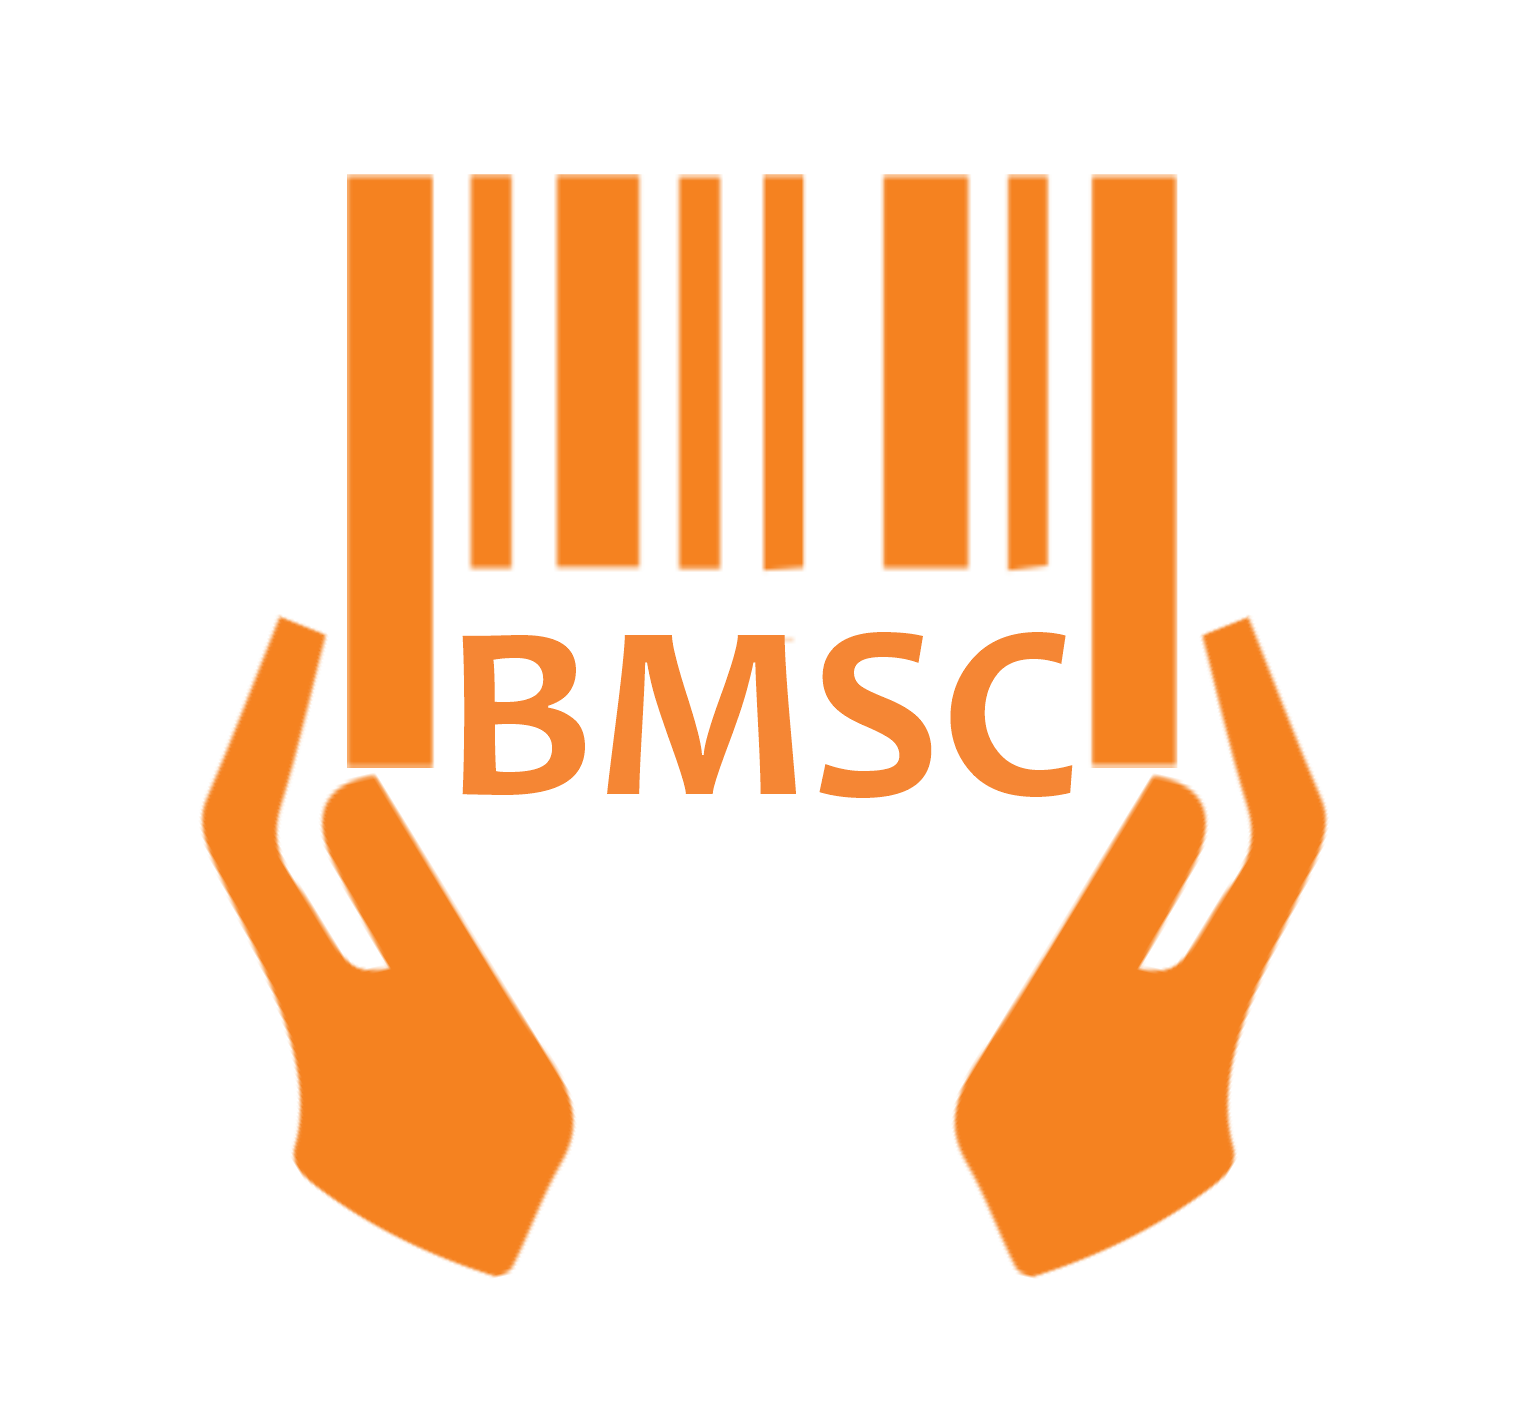 BuildersMeet BMSC Library solution